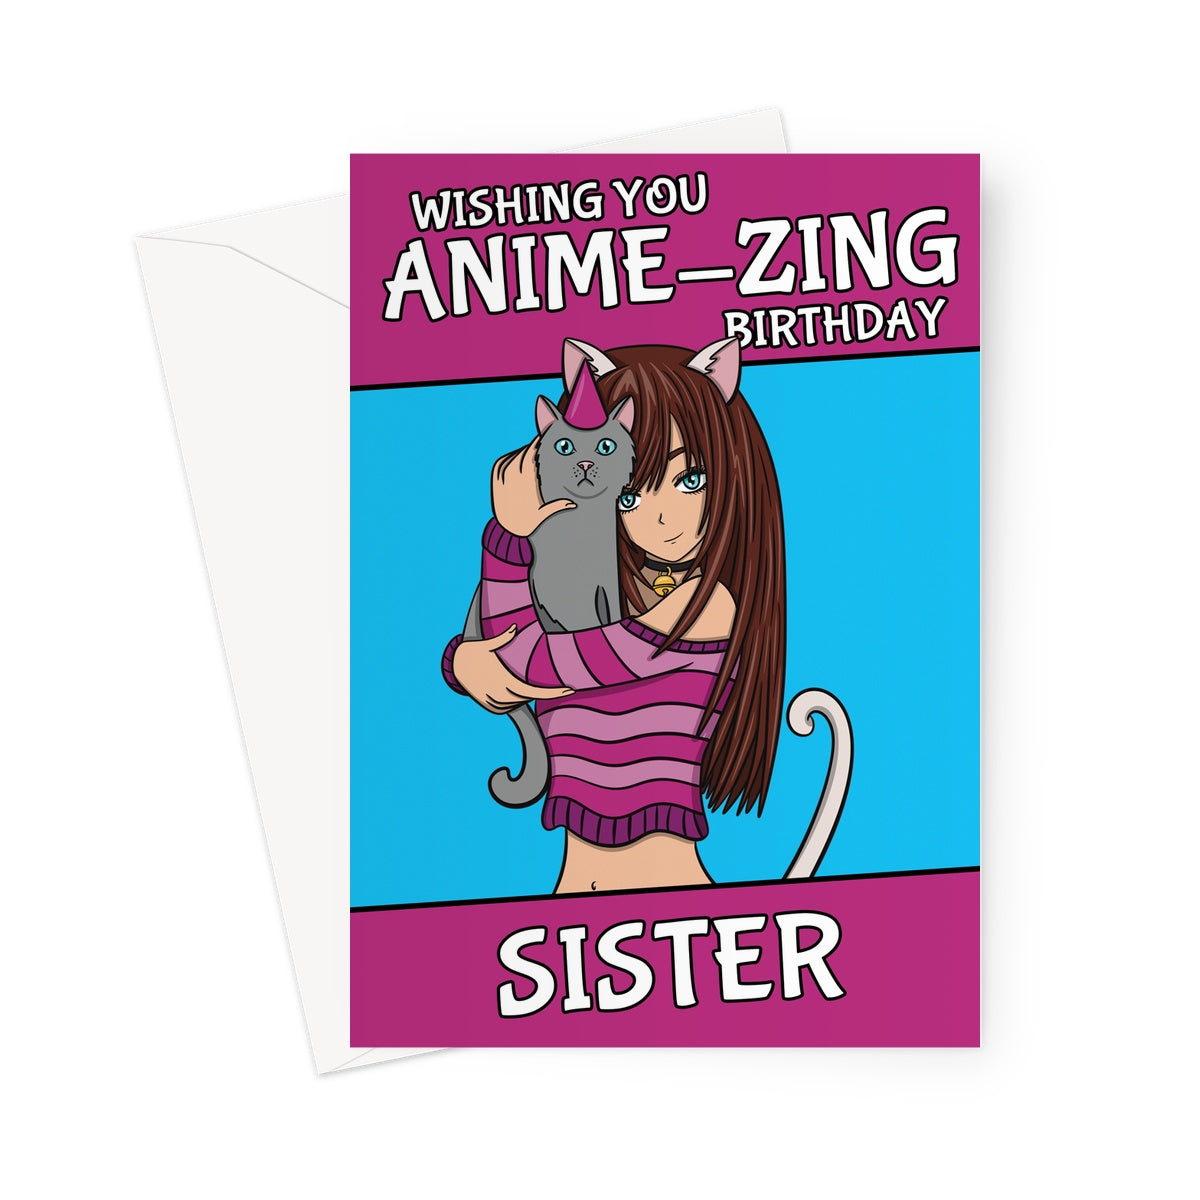 Sister Birthday Greeting Card - Pink Anime Girl